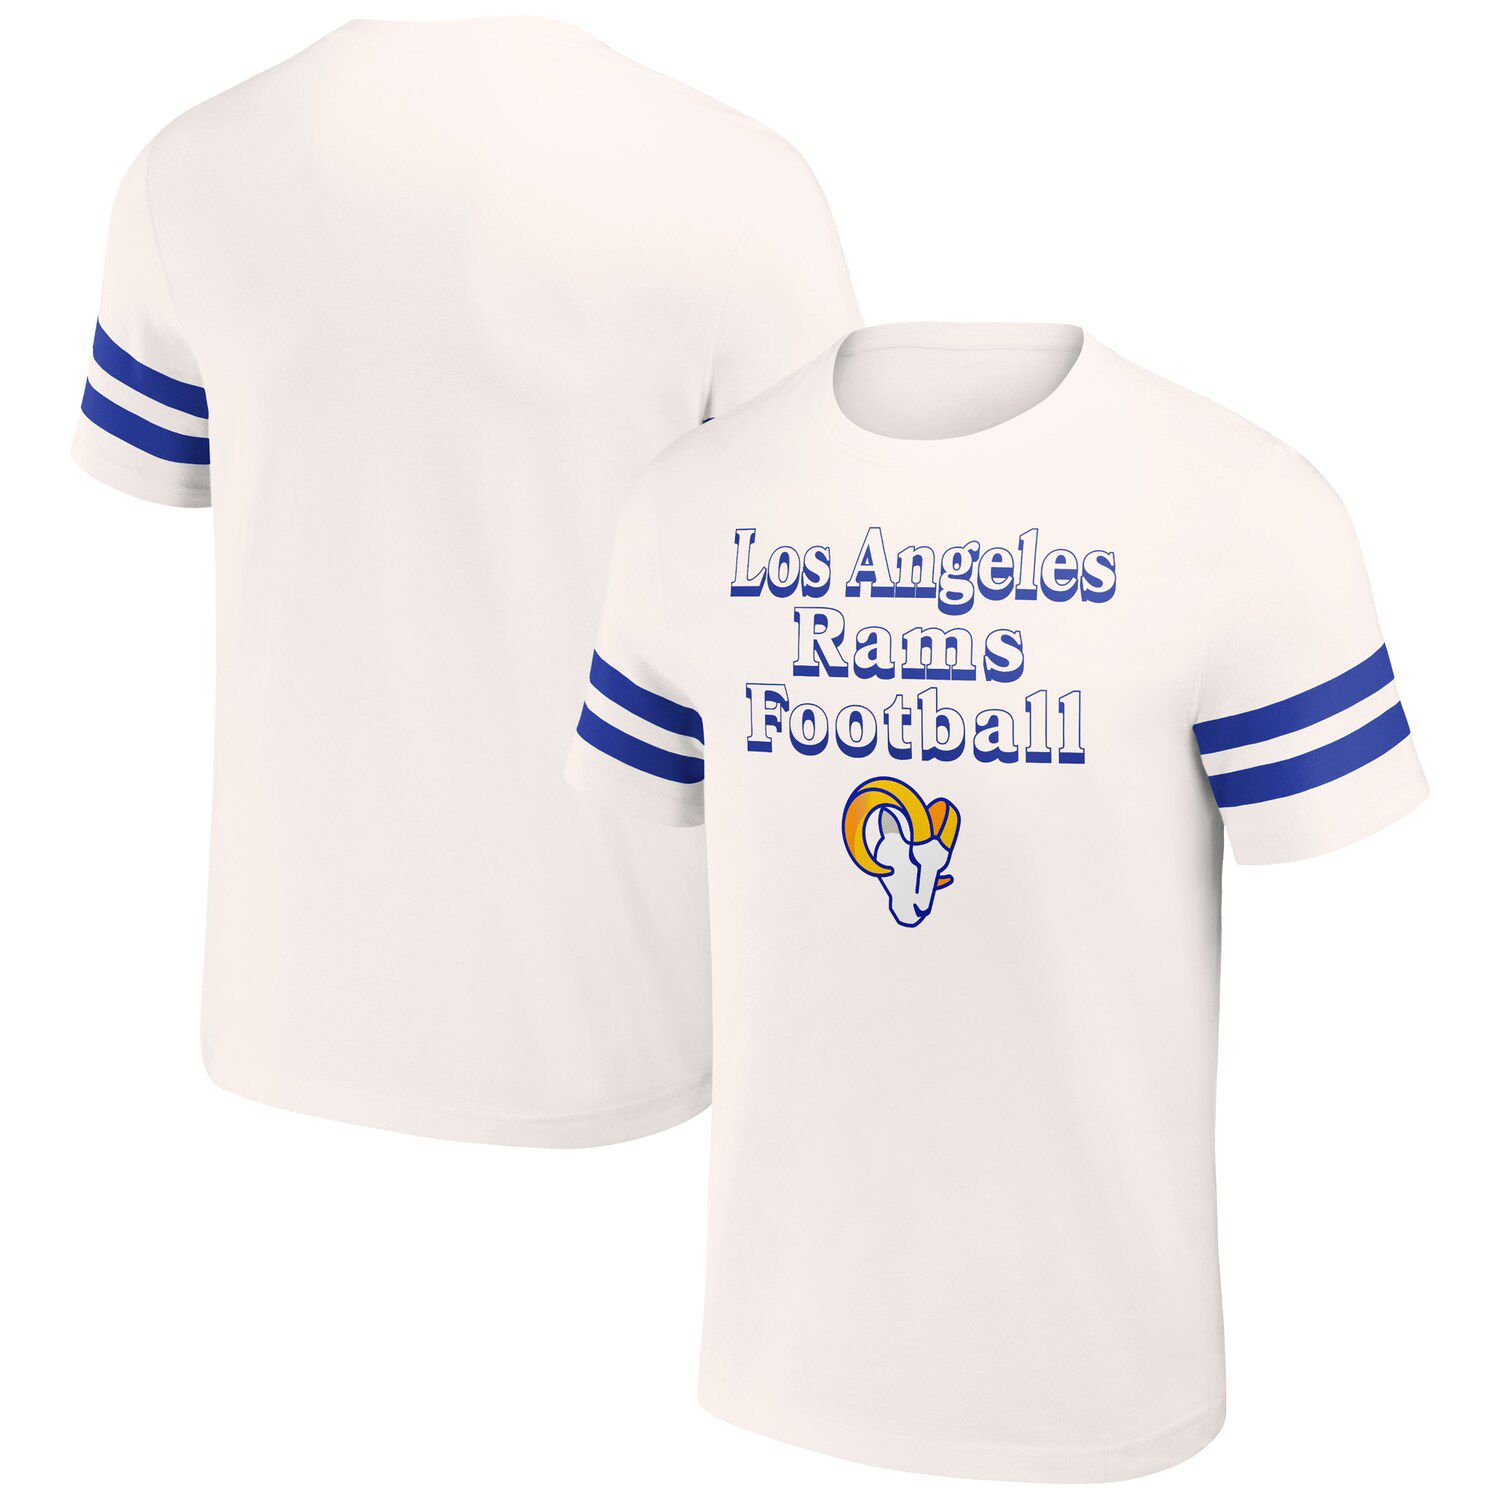 Junk Food Clothing x NFL - Los Angeles Rams - Team Helmet - Boys and Girls Short Sleeve Fan Shirt - Size Small